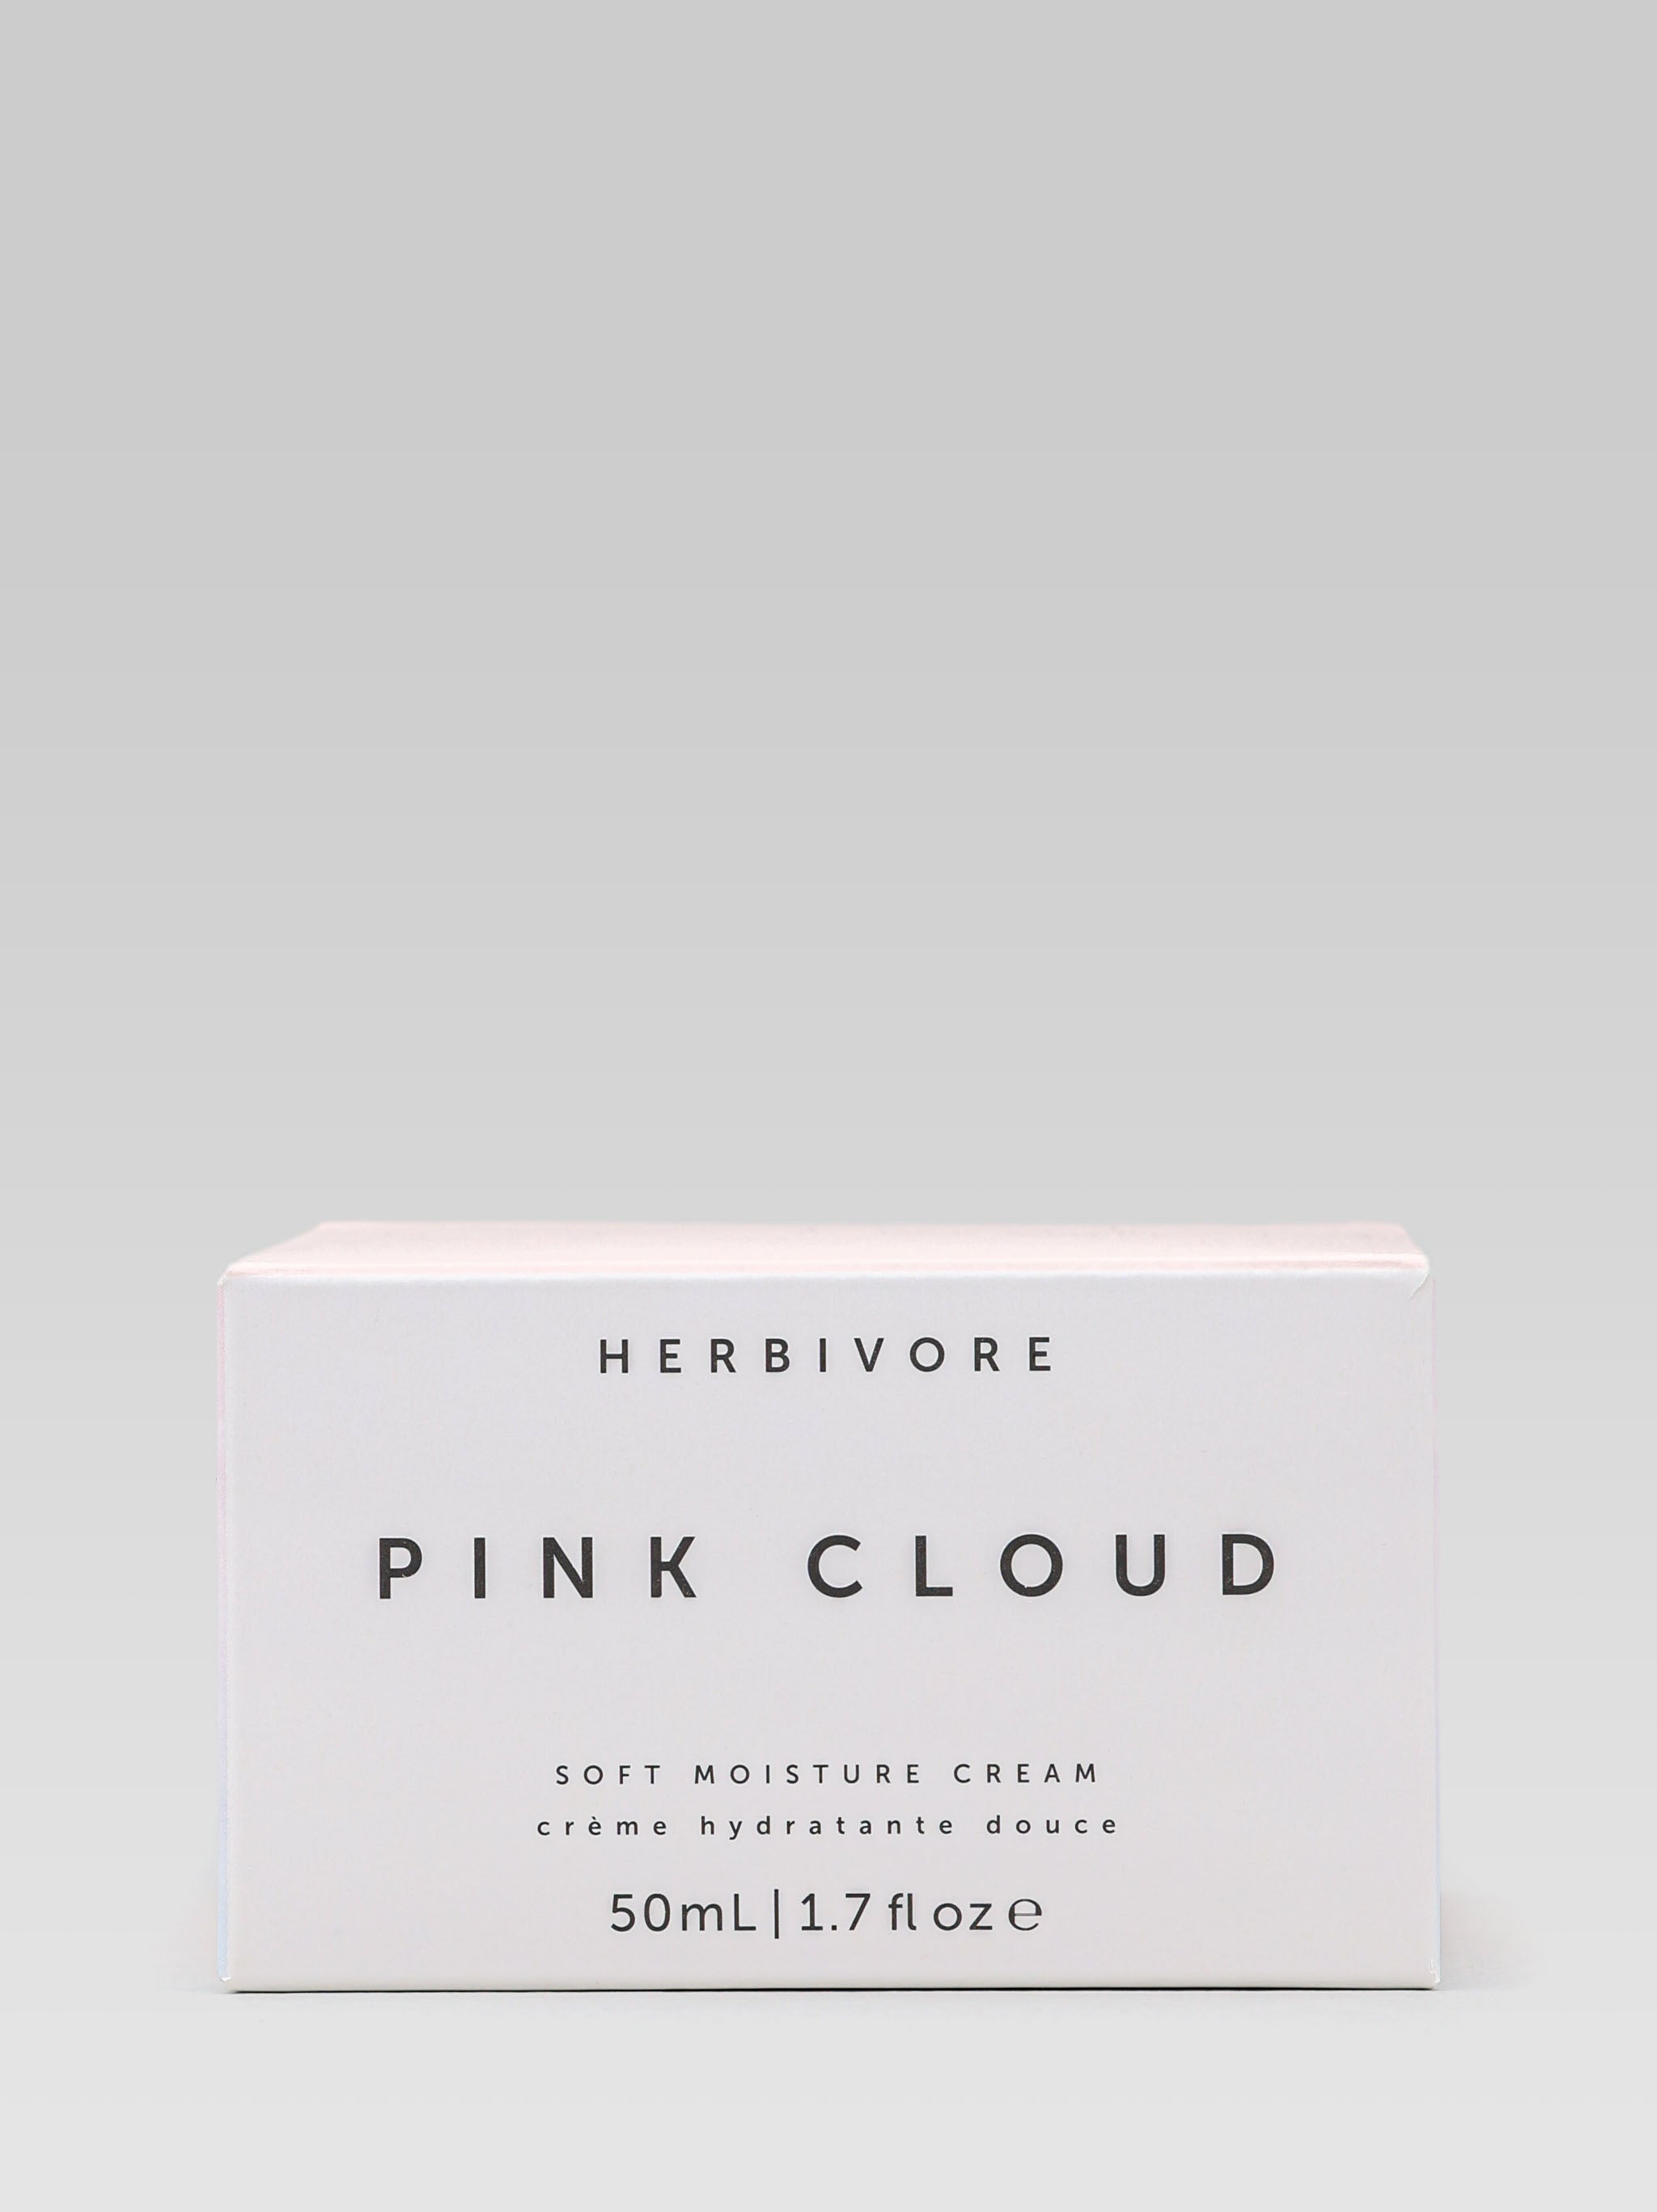 HERBIVORE BOTANICALS Pink Cloud Soft Moisture Cream Product Packaging